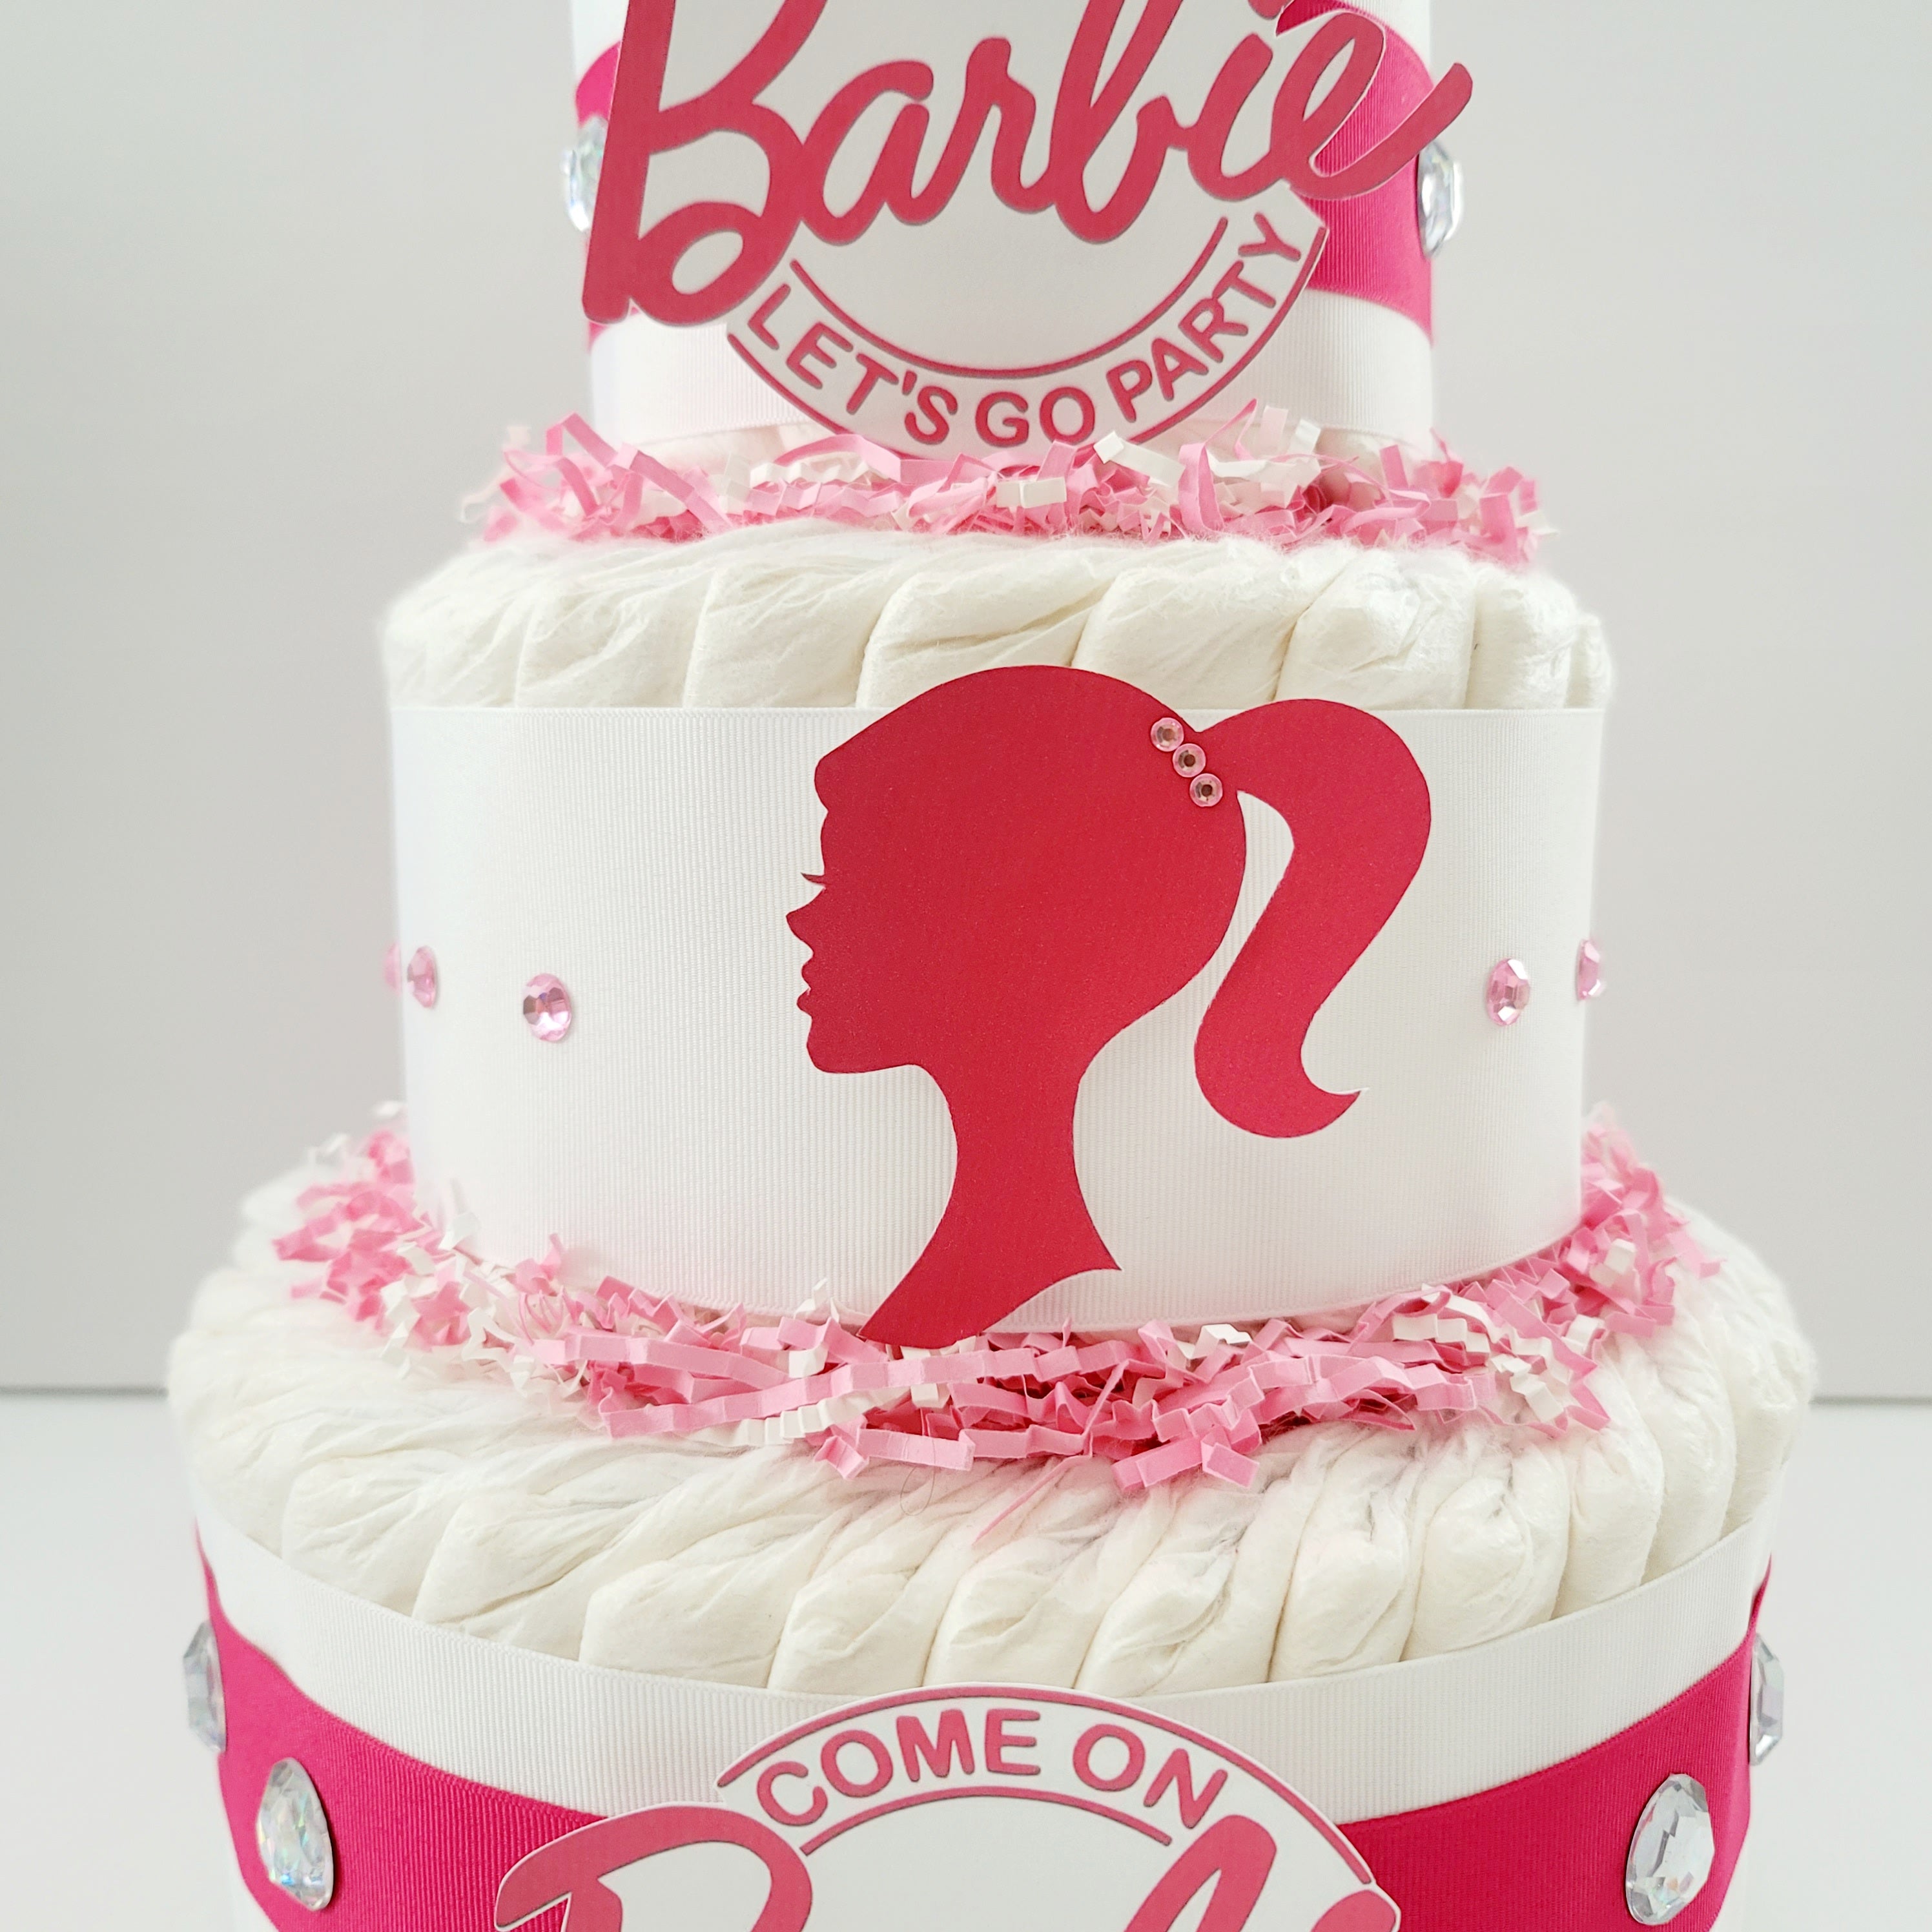 Top more than 136 barbie cake decorating - awesomeenglish.edu.vn